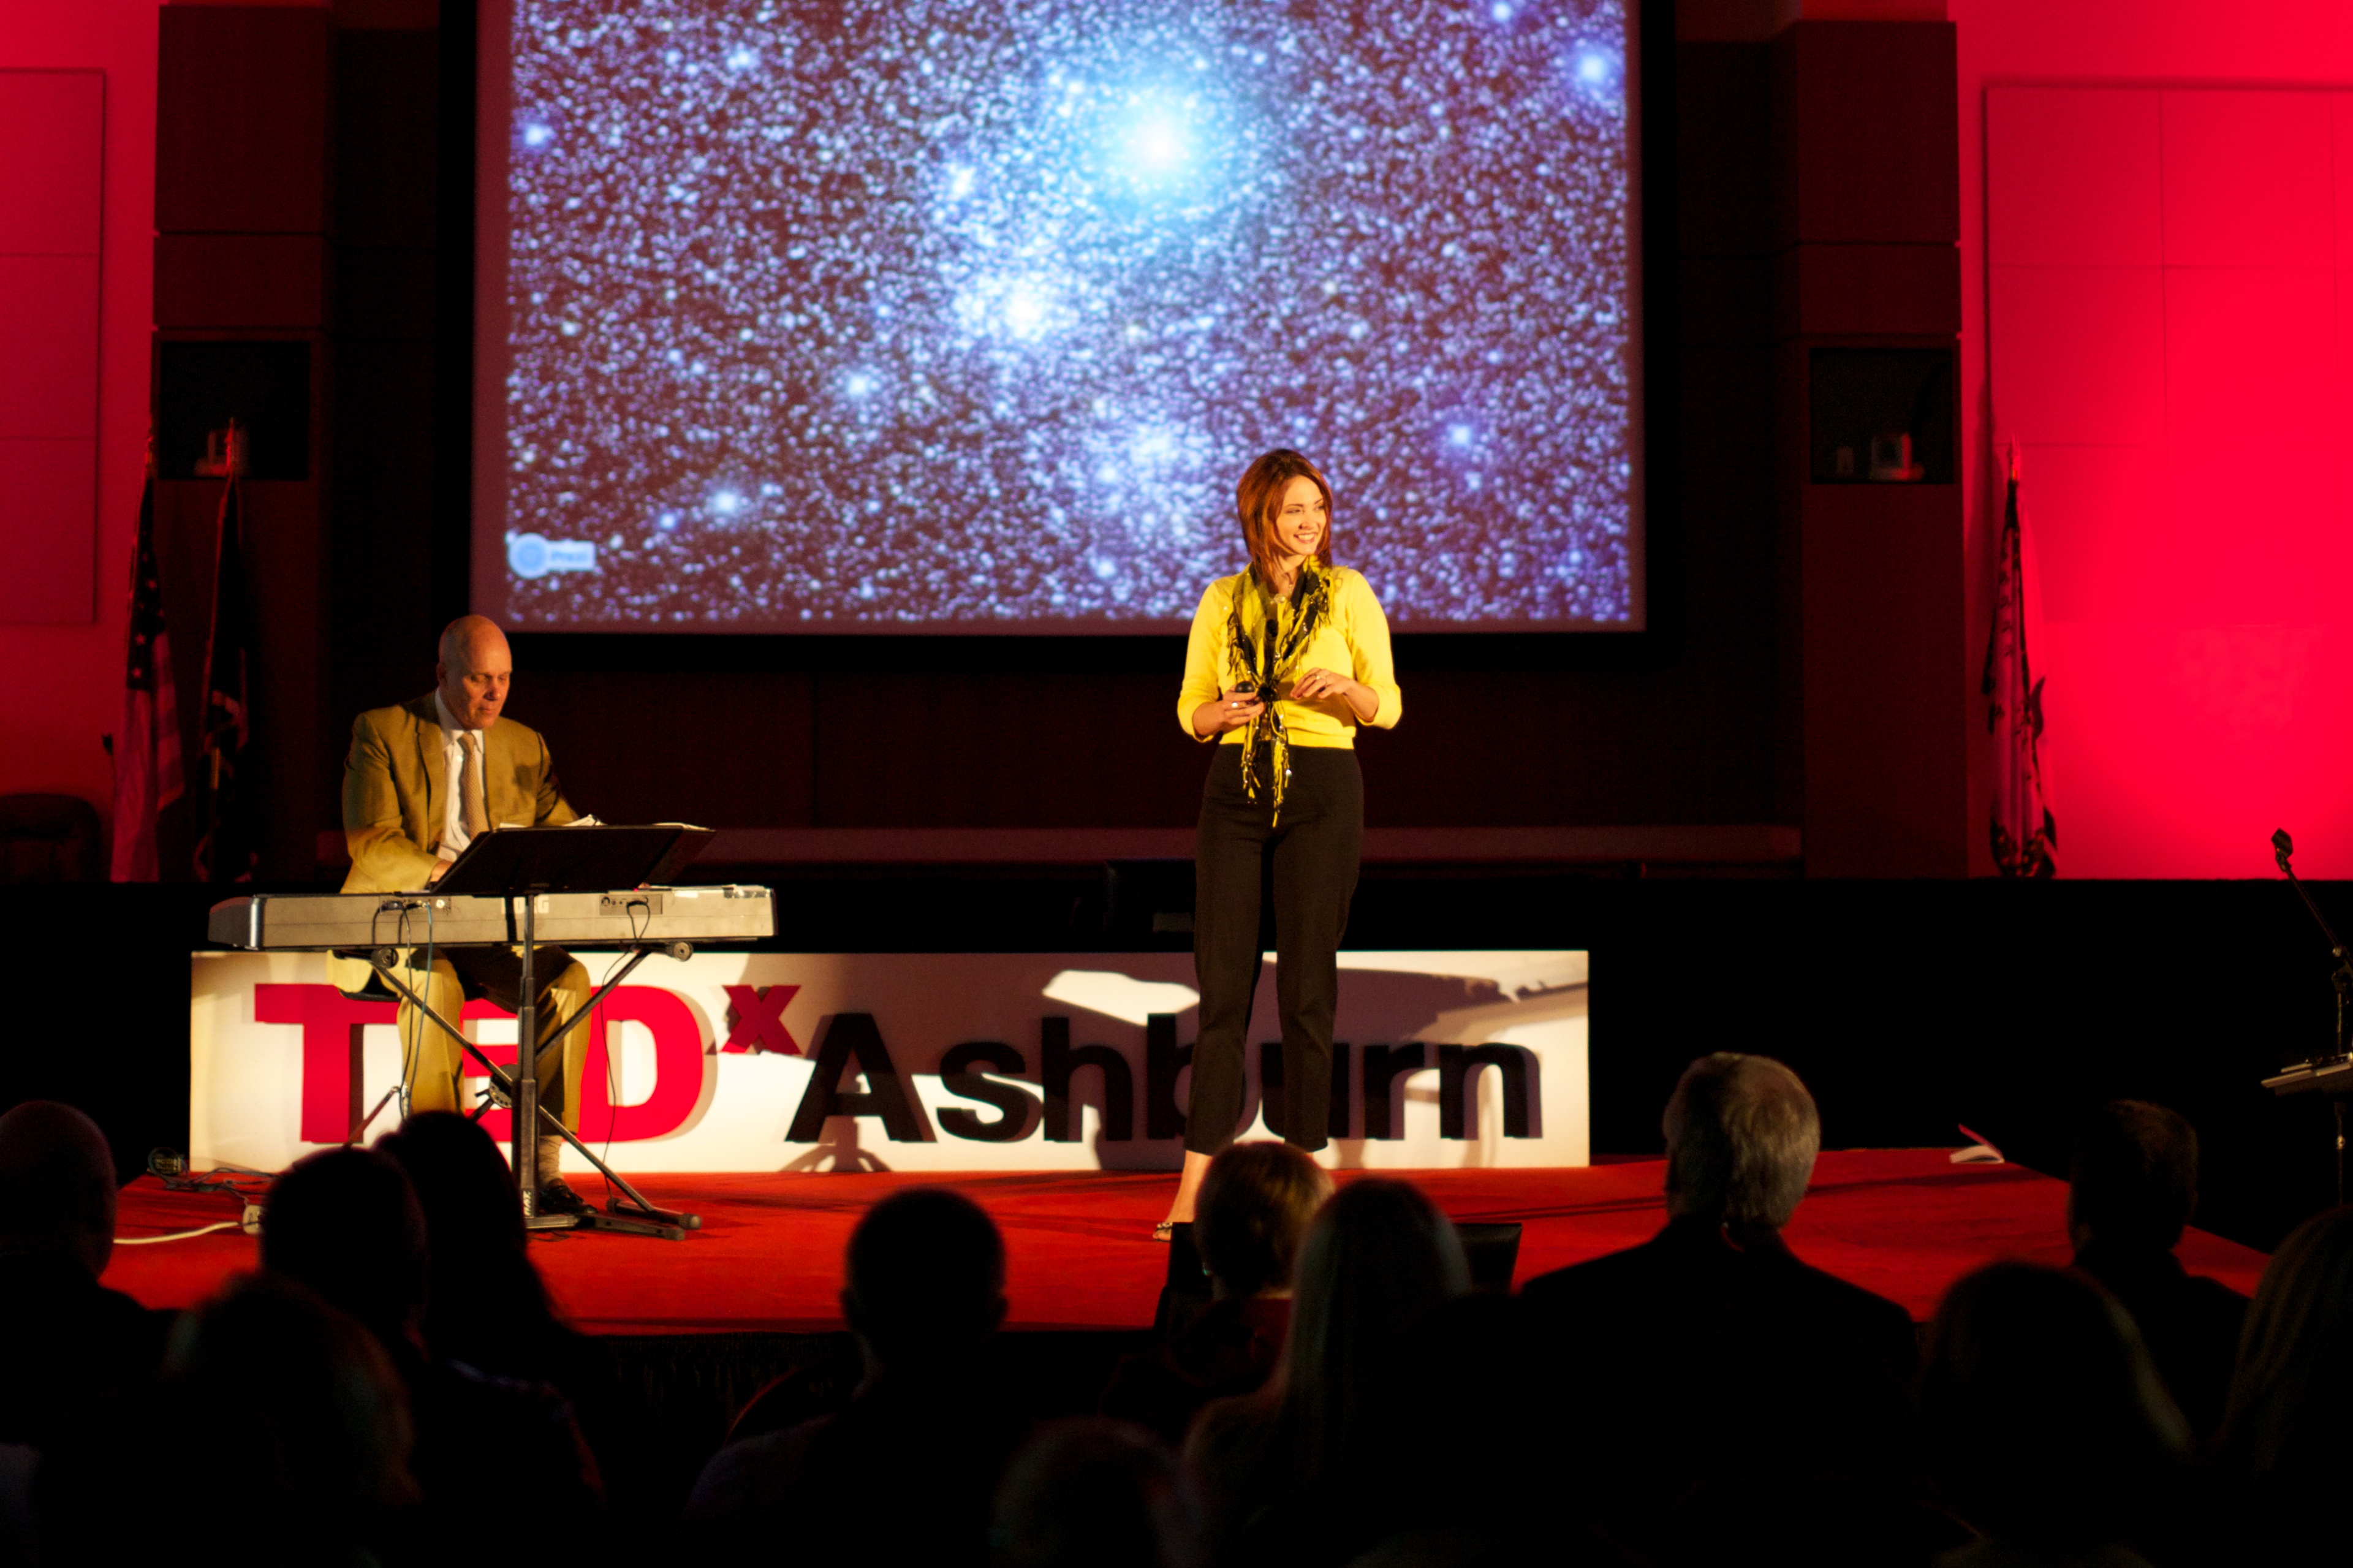 Speaking at TEDxAshburn